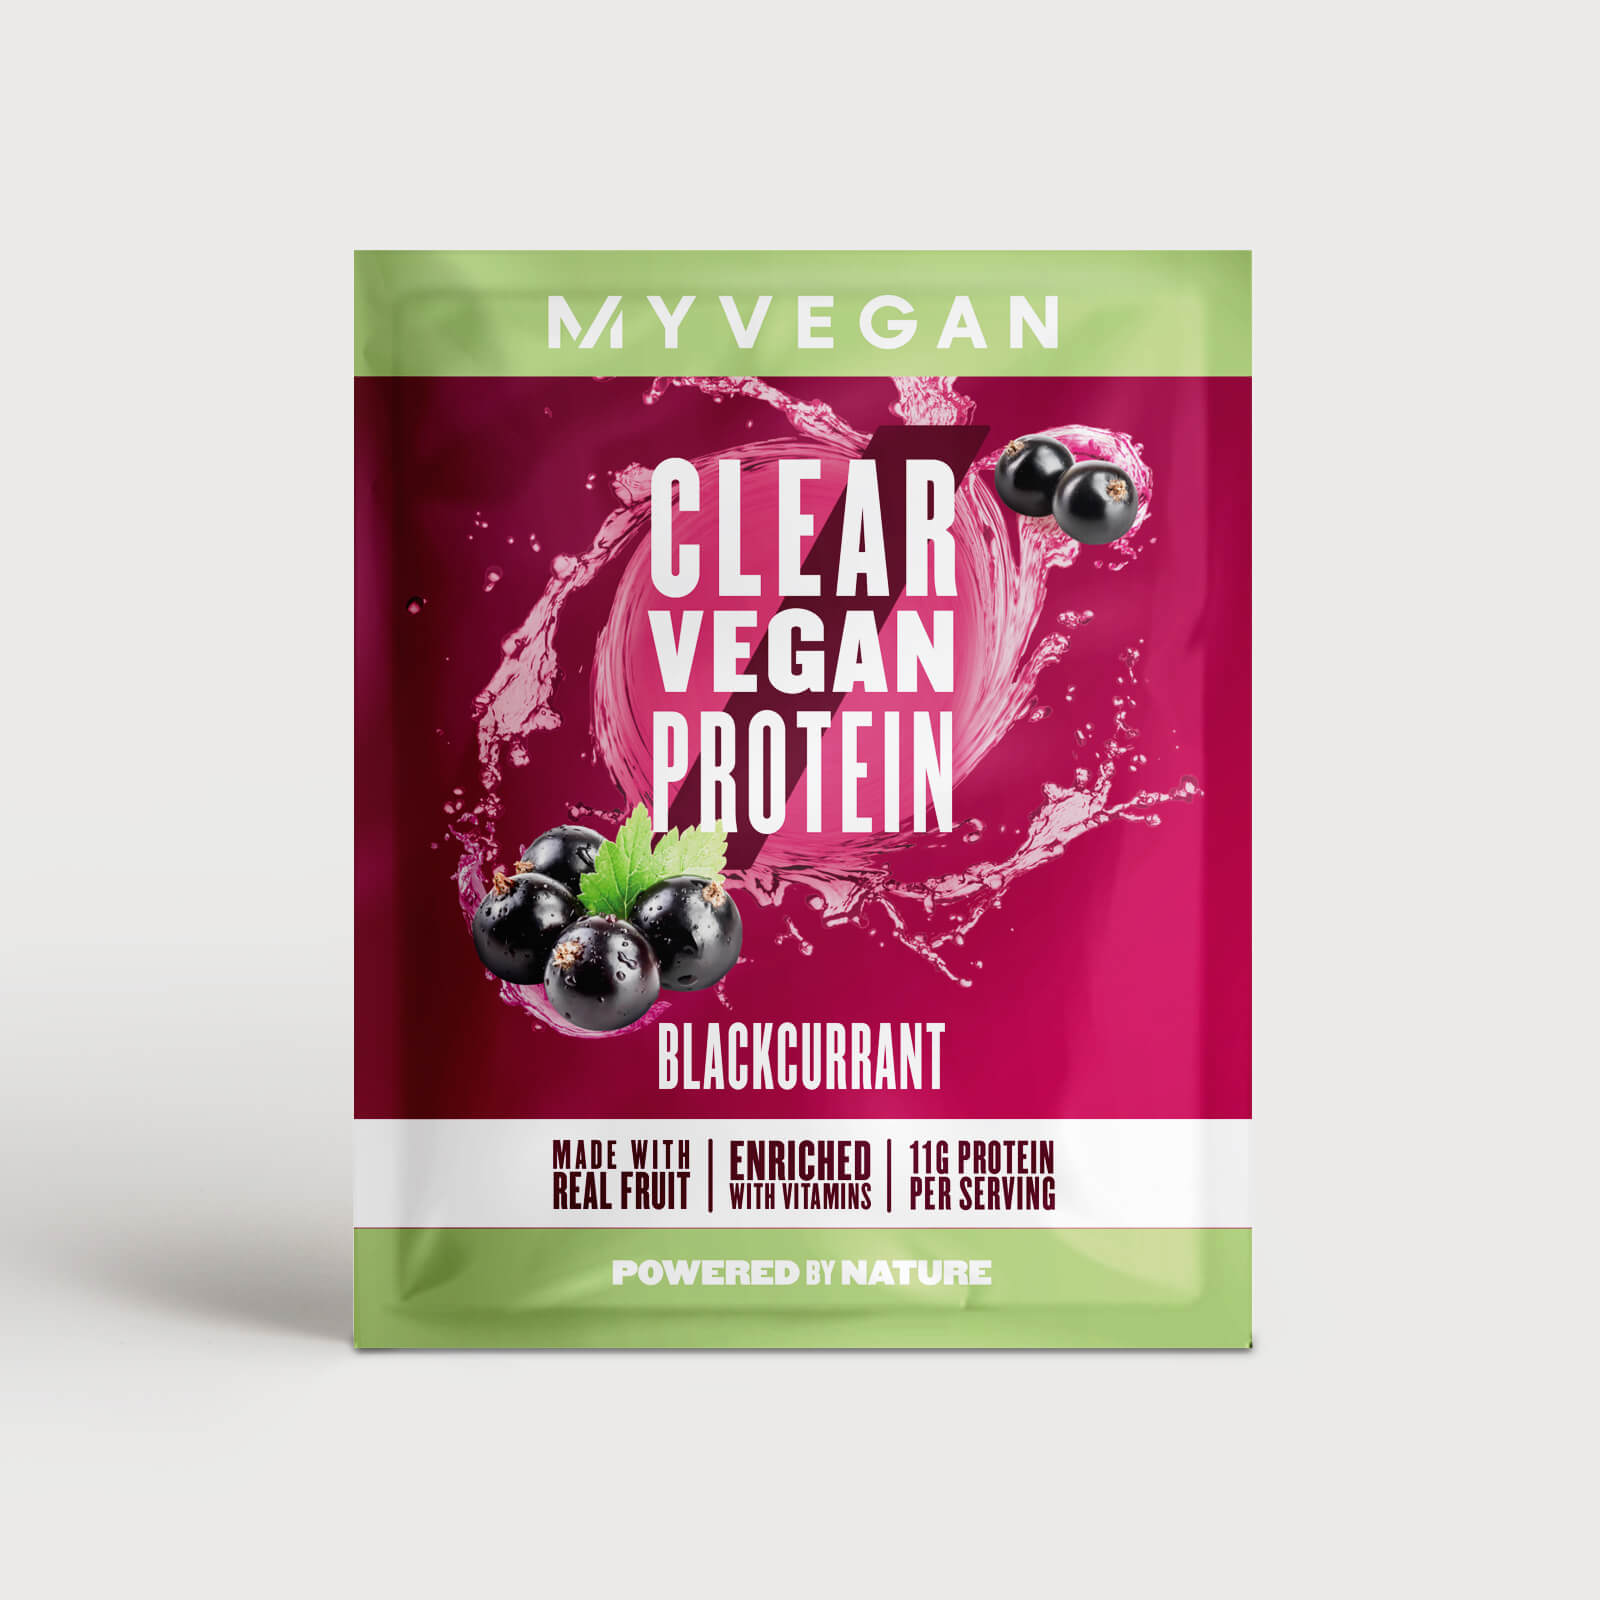 Image of Myvegan Clear Vegan Protein, 16g (Sample) - 16g - Ribes nero